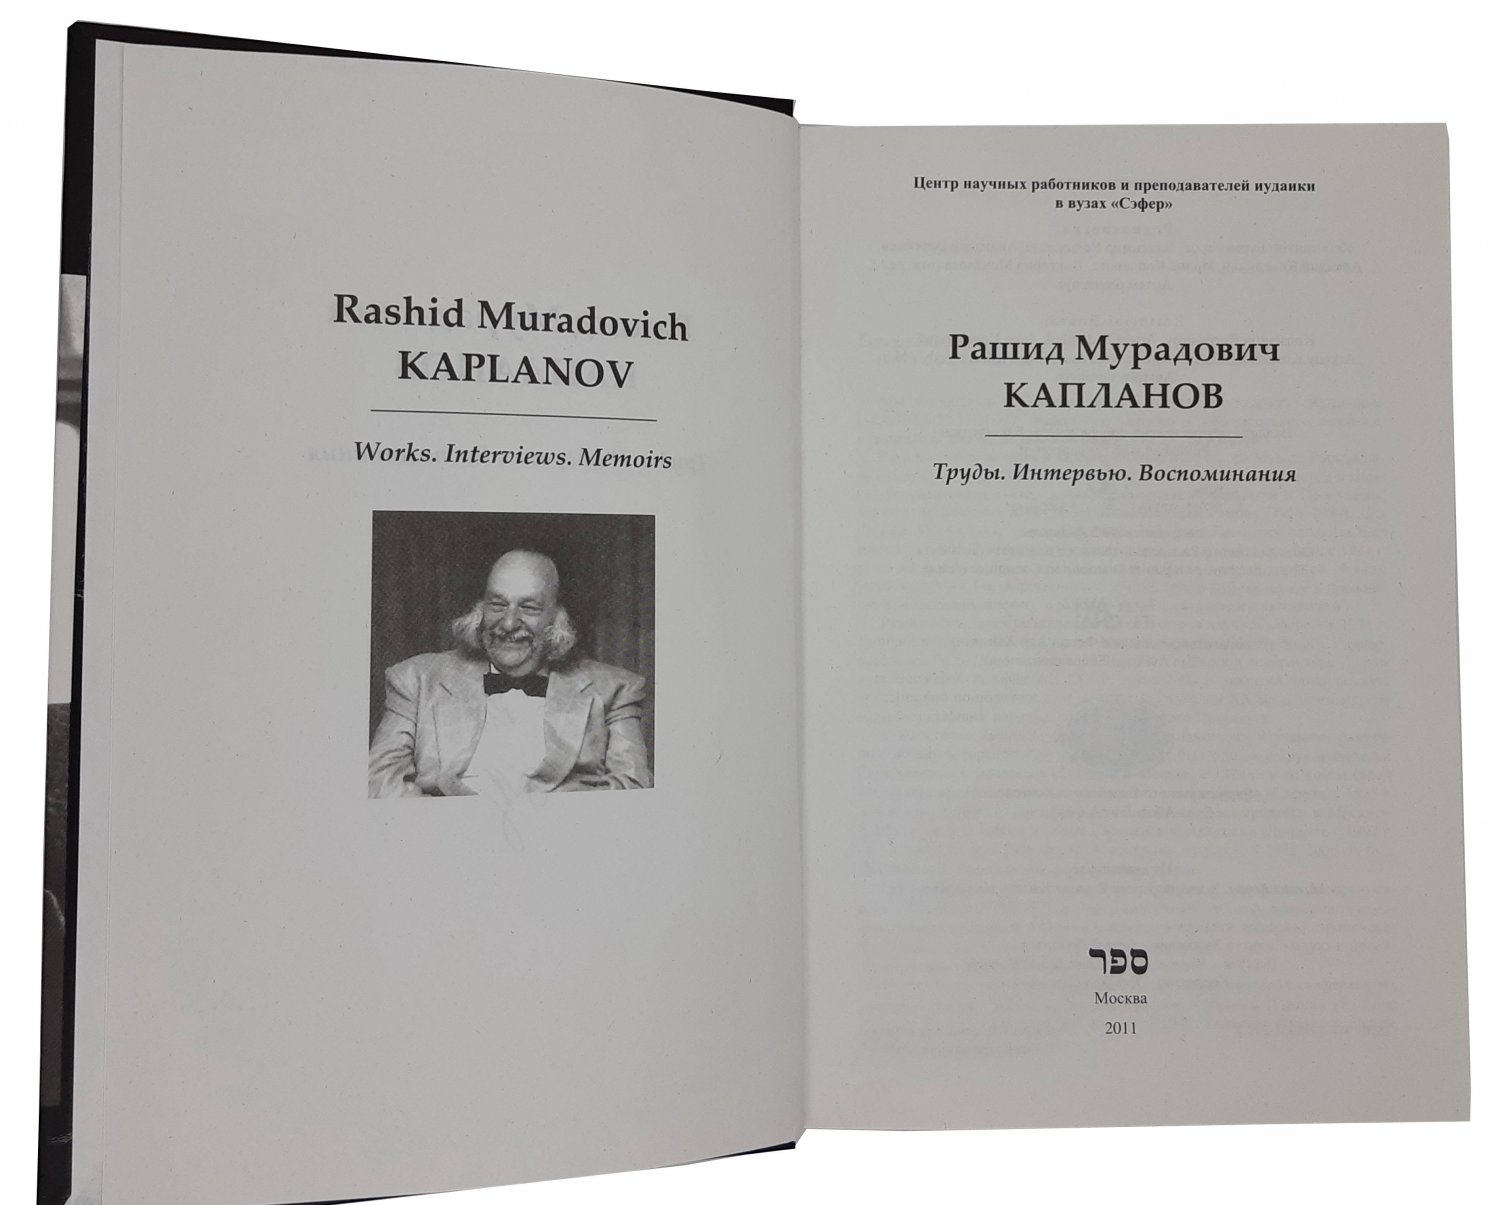 Rashid Muradovich Kaplanov